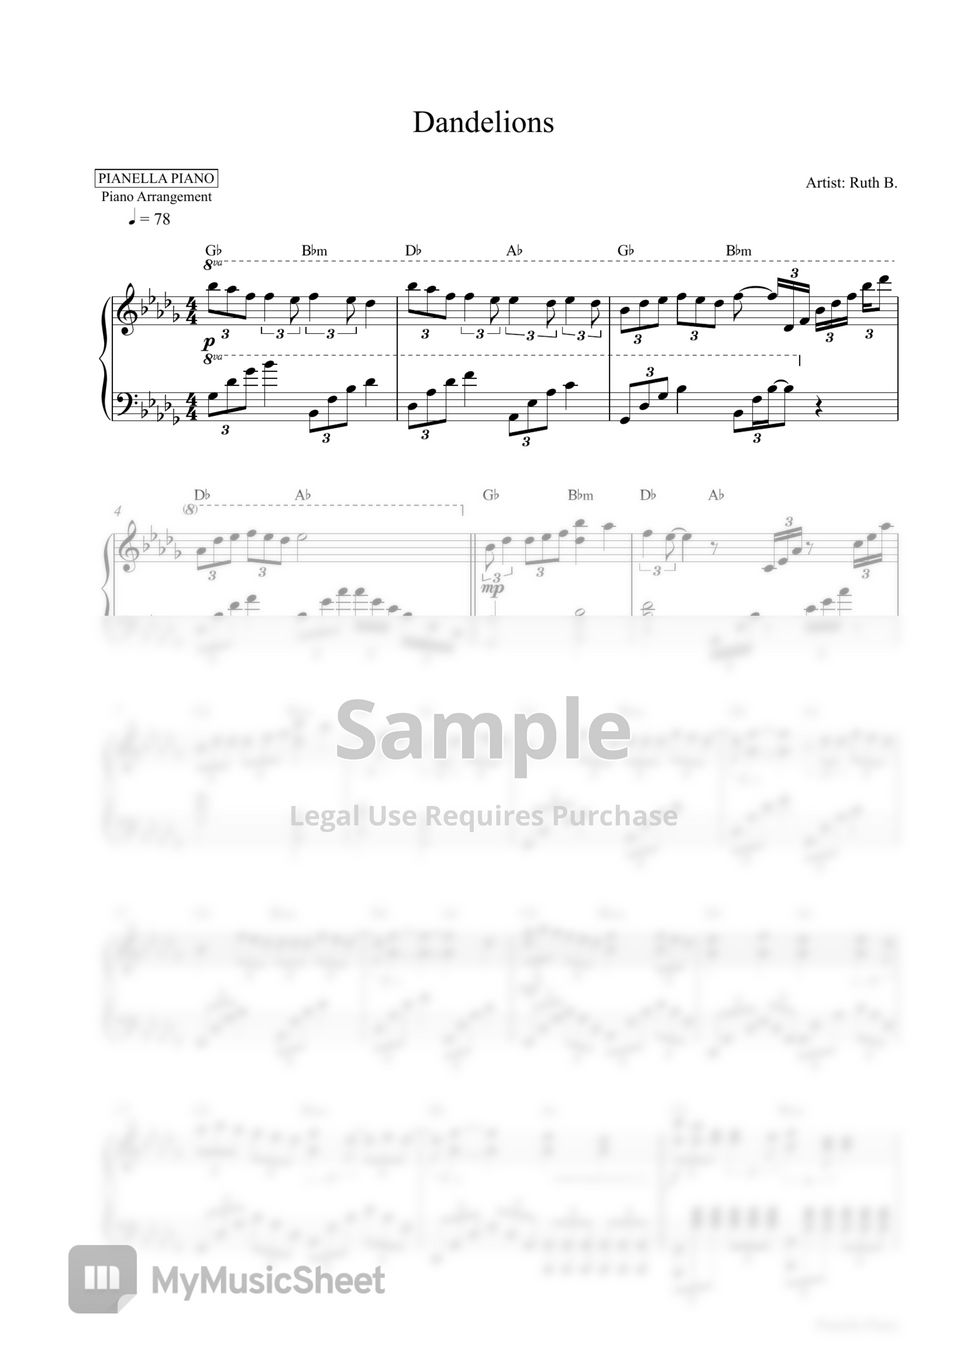 Ruth B. - Dandelions (Piano Sheet | Get 2 PDF: in Original Key Db Major & Easier Key C Major) by Pianella Piano